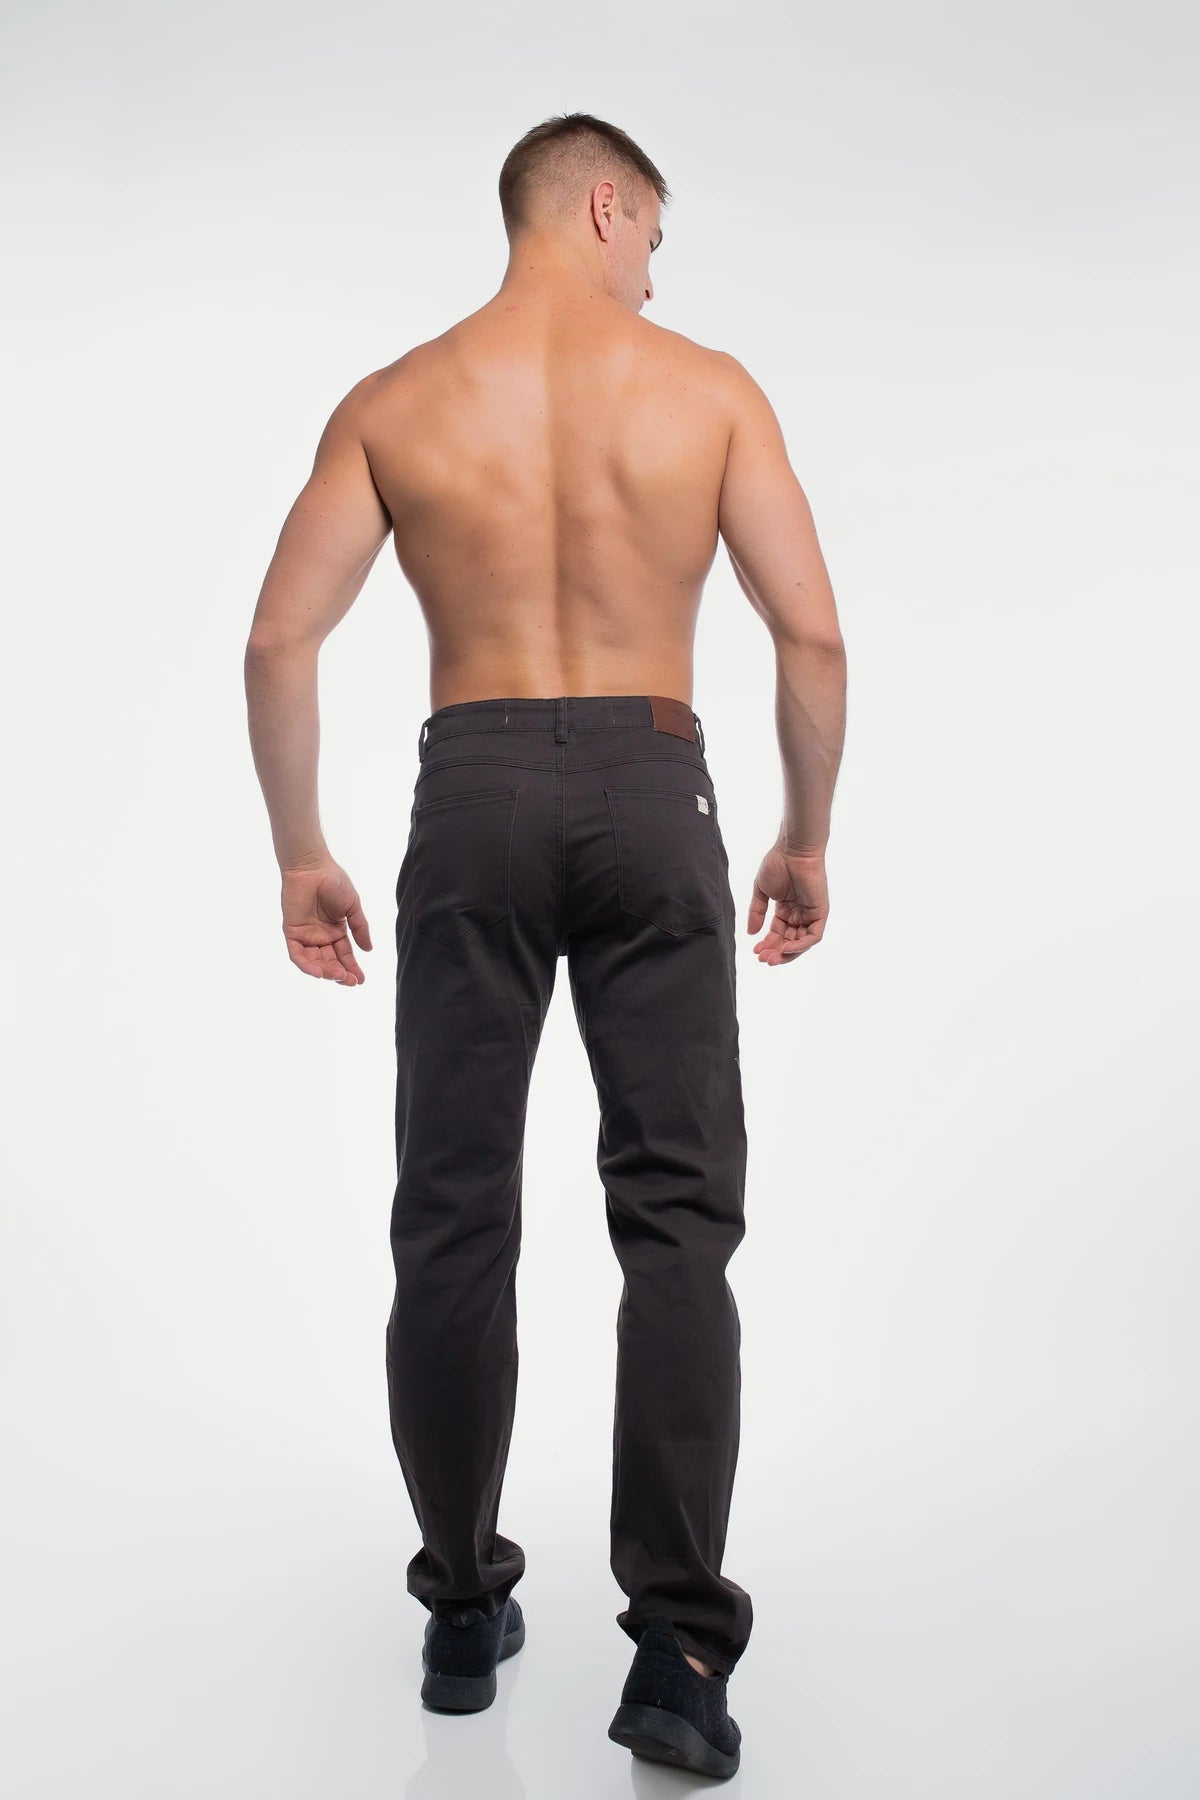 Marine Layer 5 Pocket Twill Pant  Athletic Fit  Khaki  Casual Pants   Huckberry